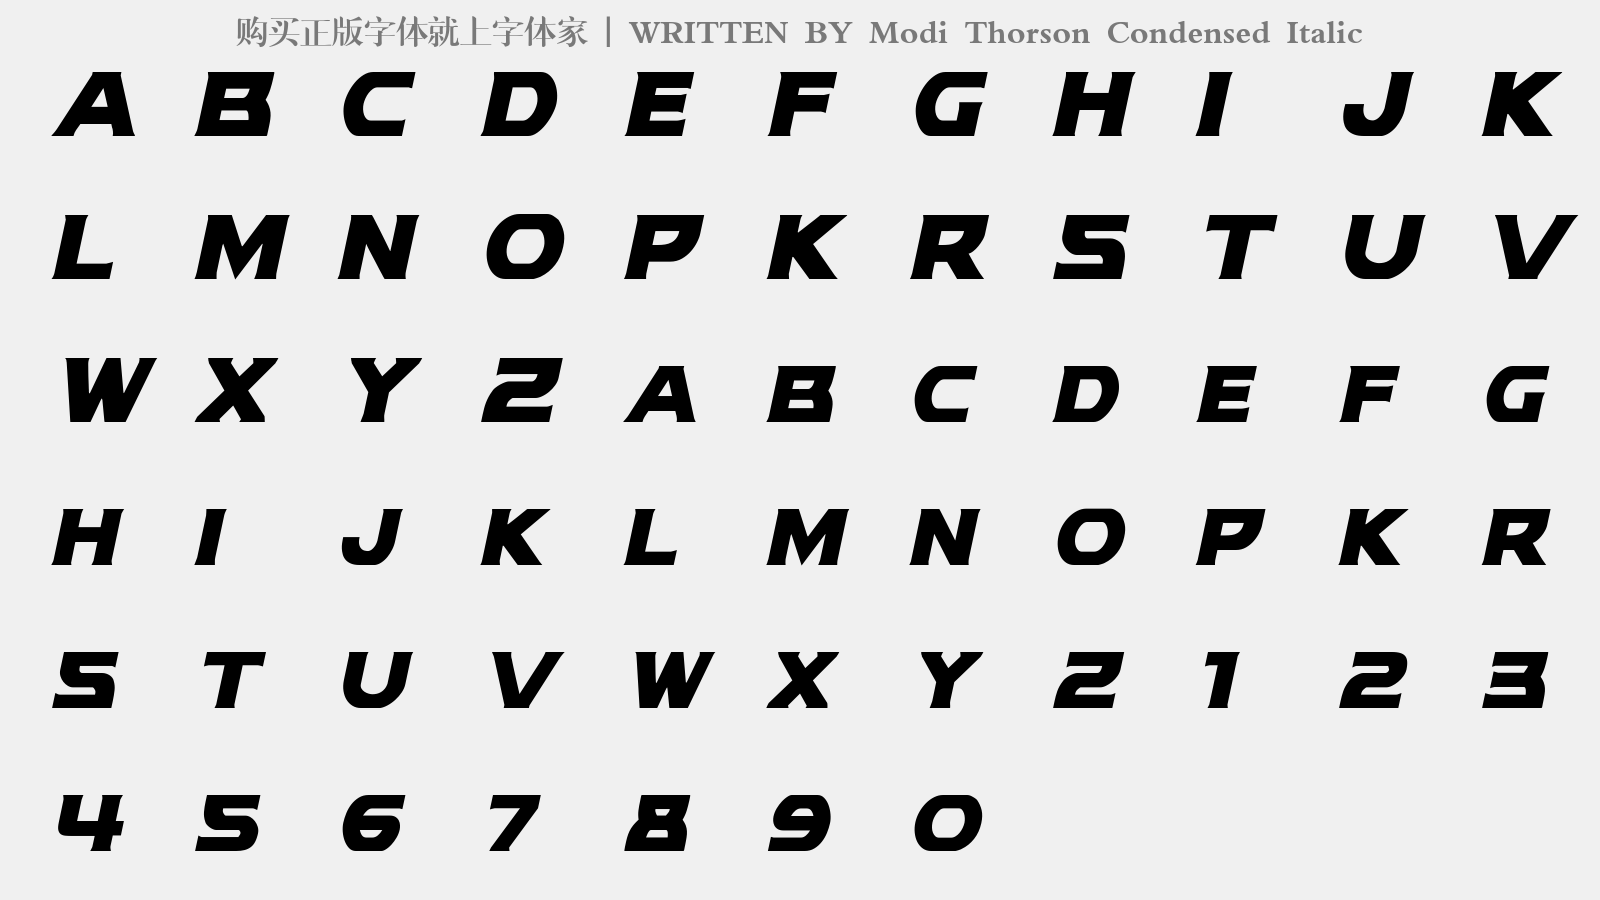 Modi Thorson Condensed Italic - 大写字母/小写字母/数字